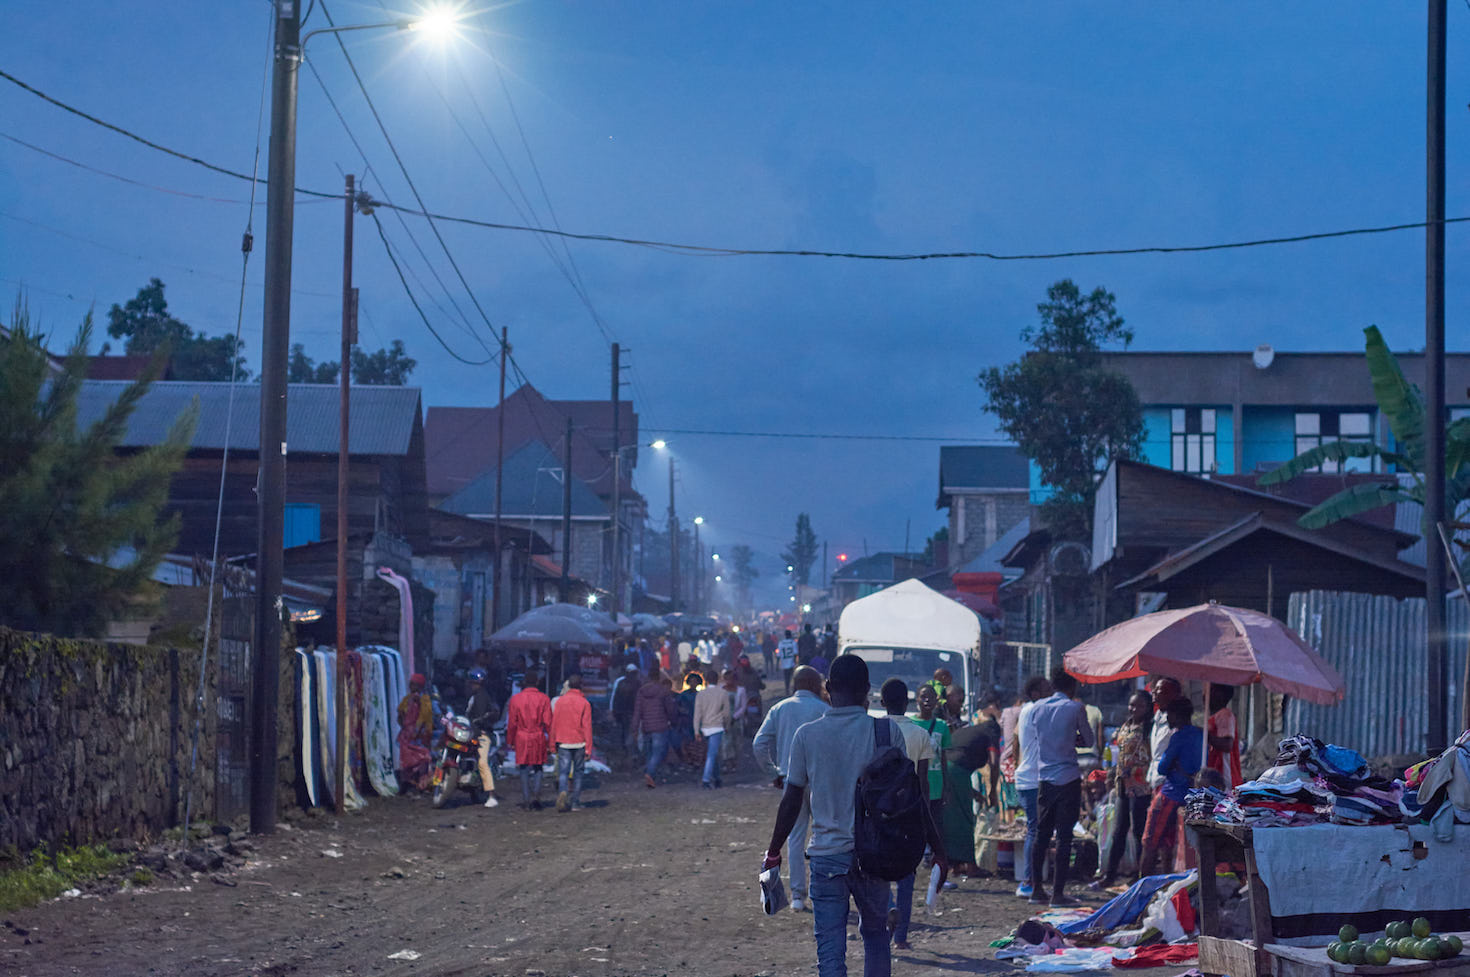 Public street lighting provided by Nuru in a community near Garamba National Park, Democratic Republic of Congo.